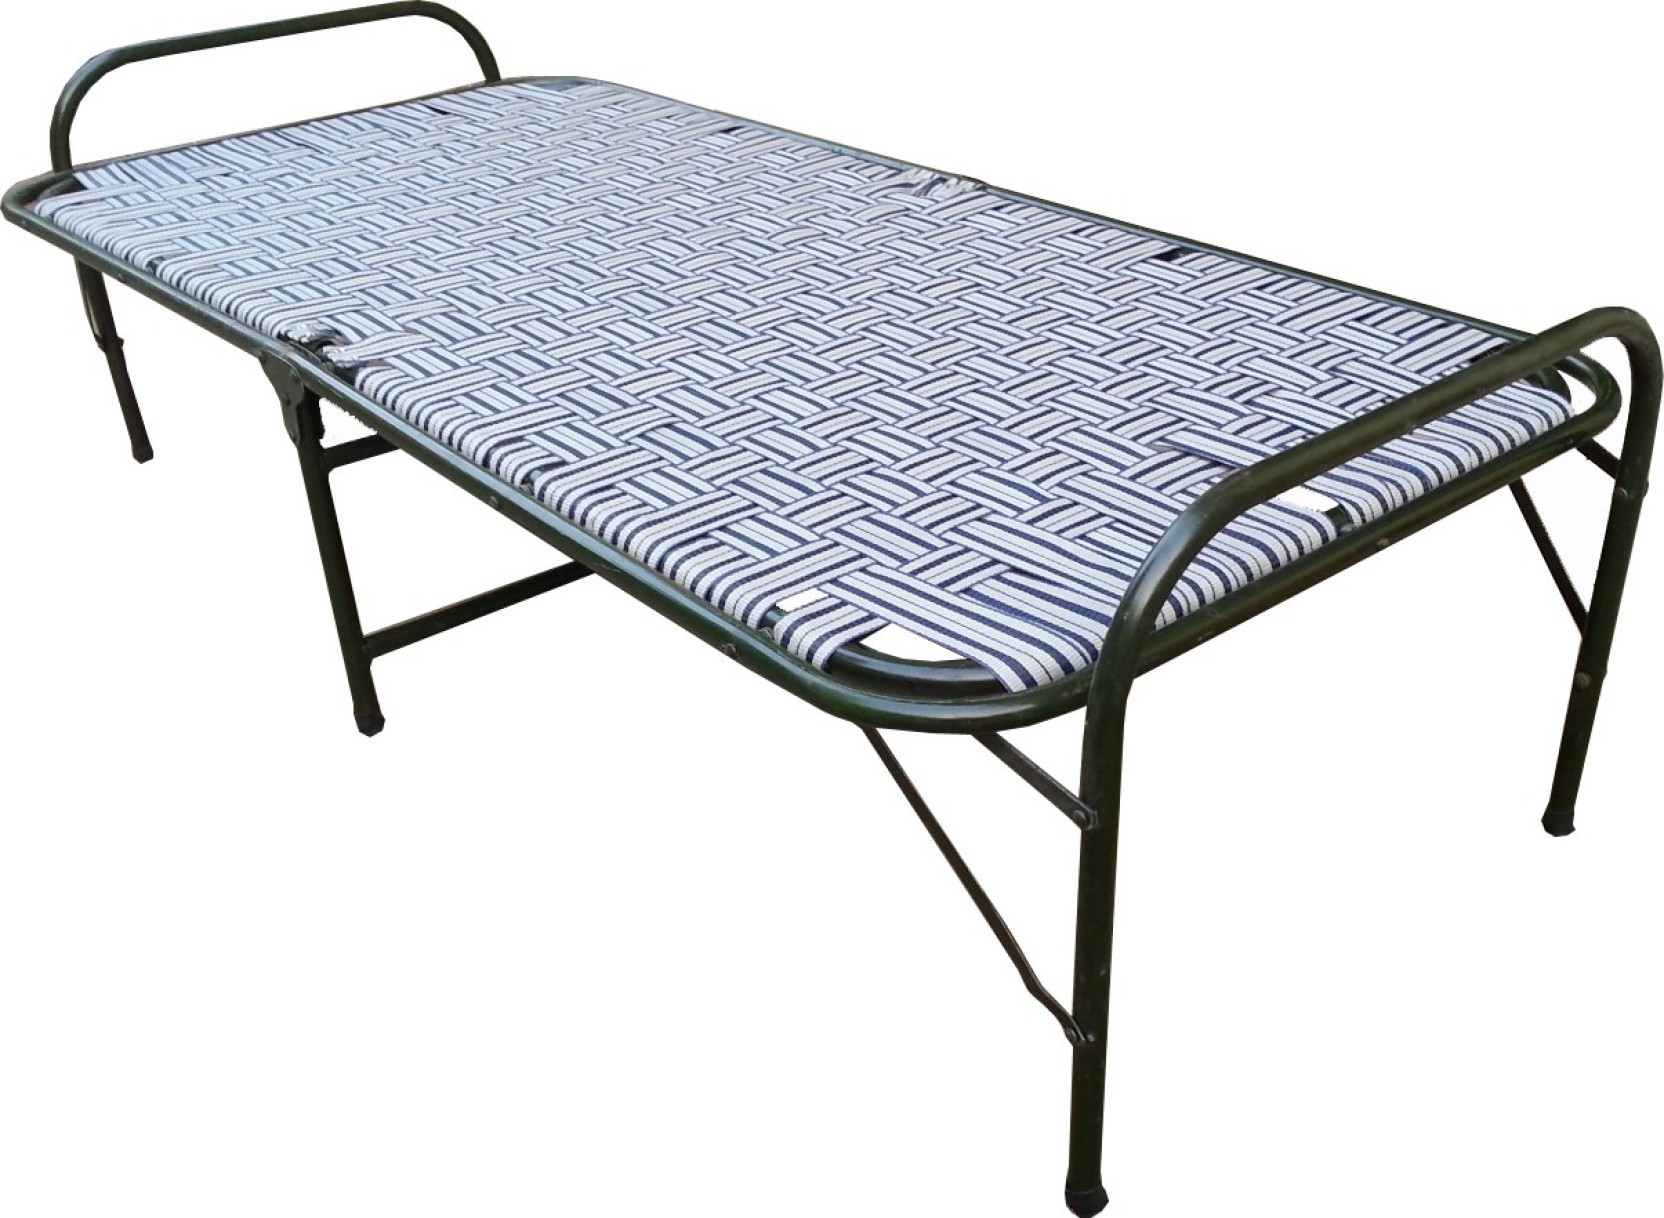 single cot mattress price